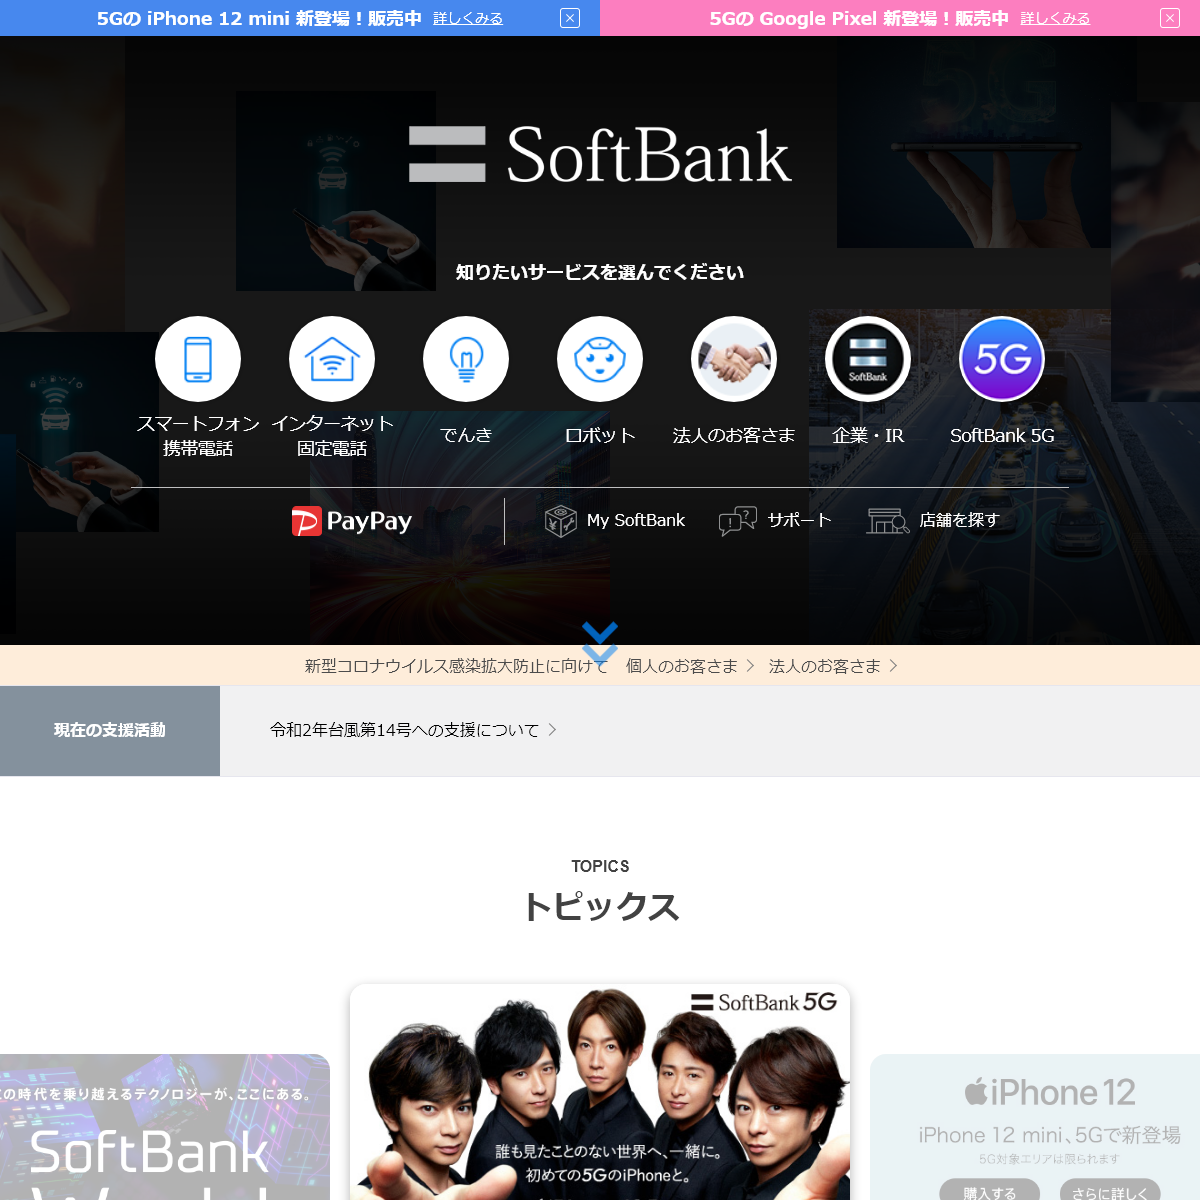 A complete backup of softbank.jp